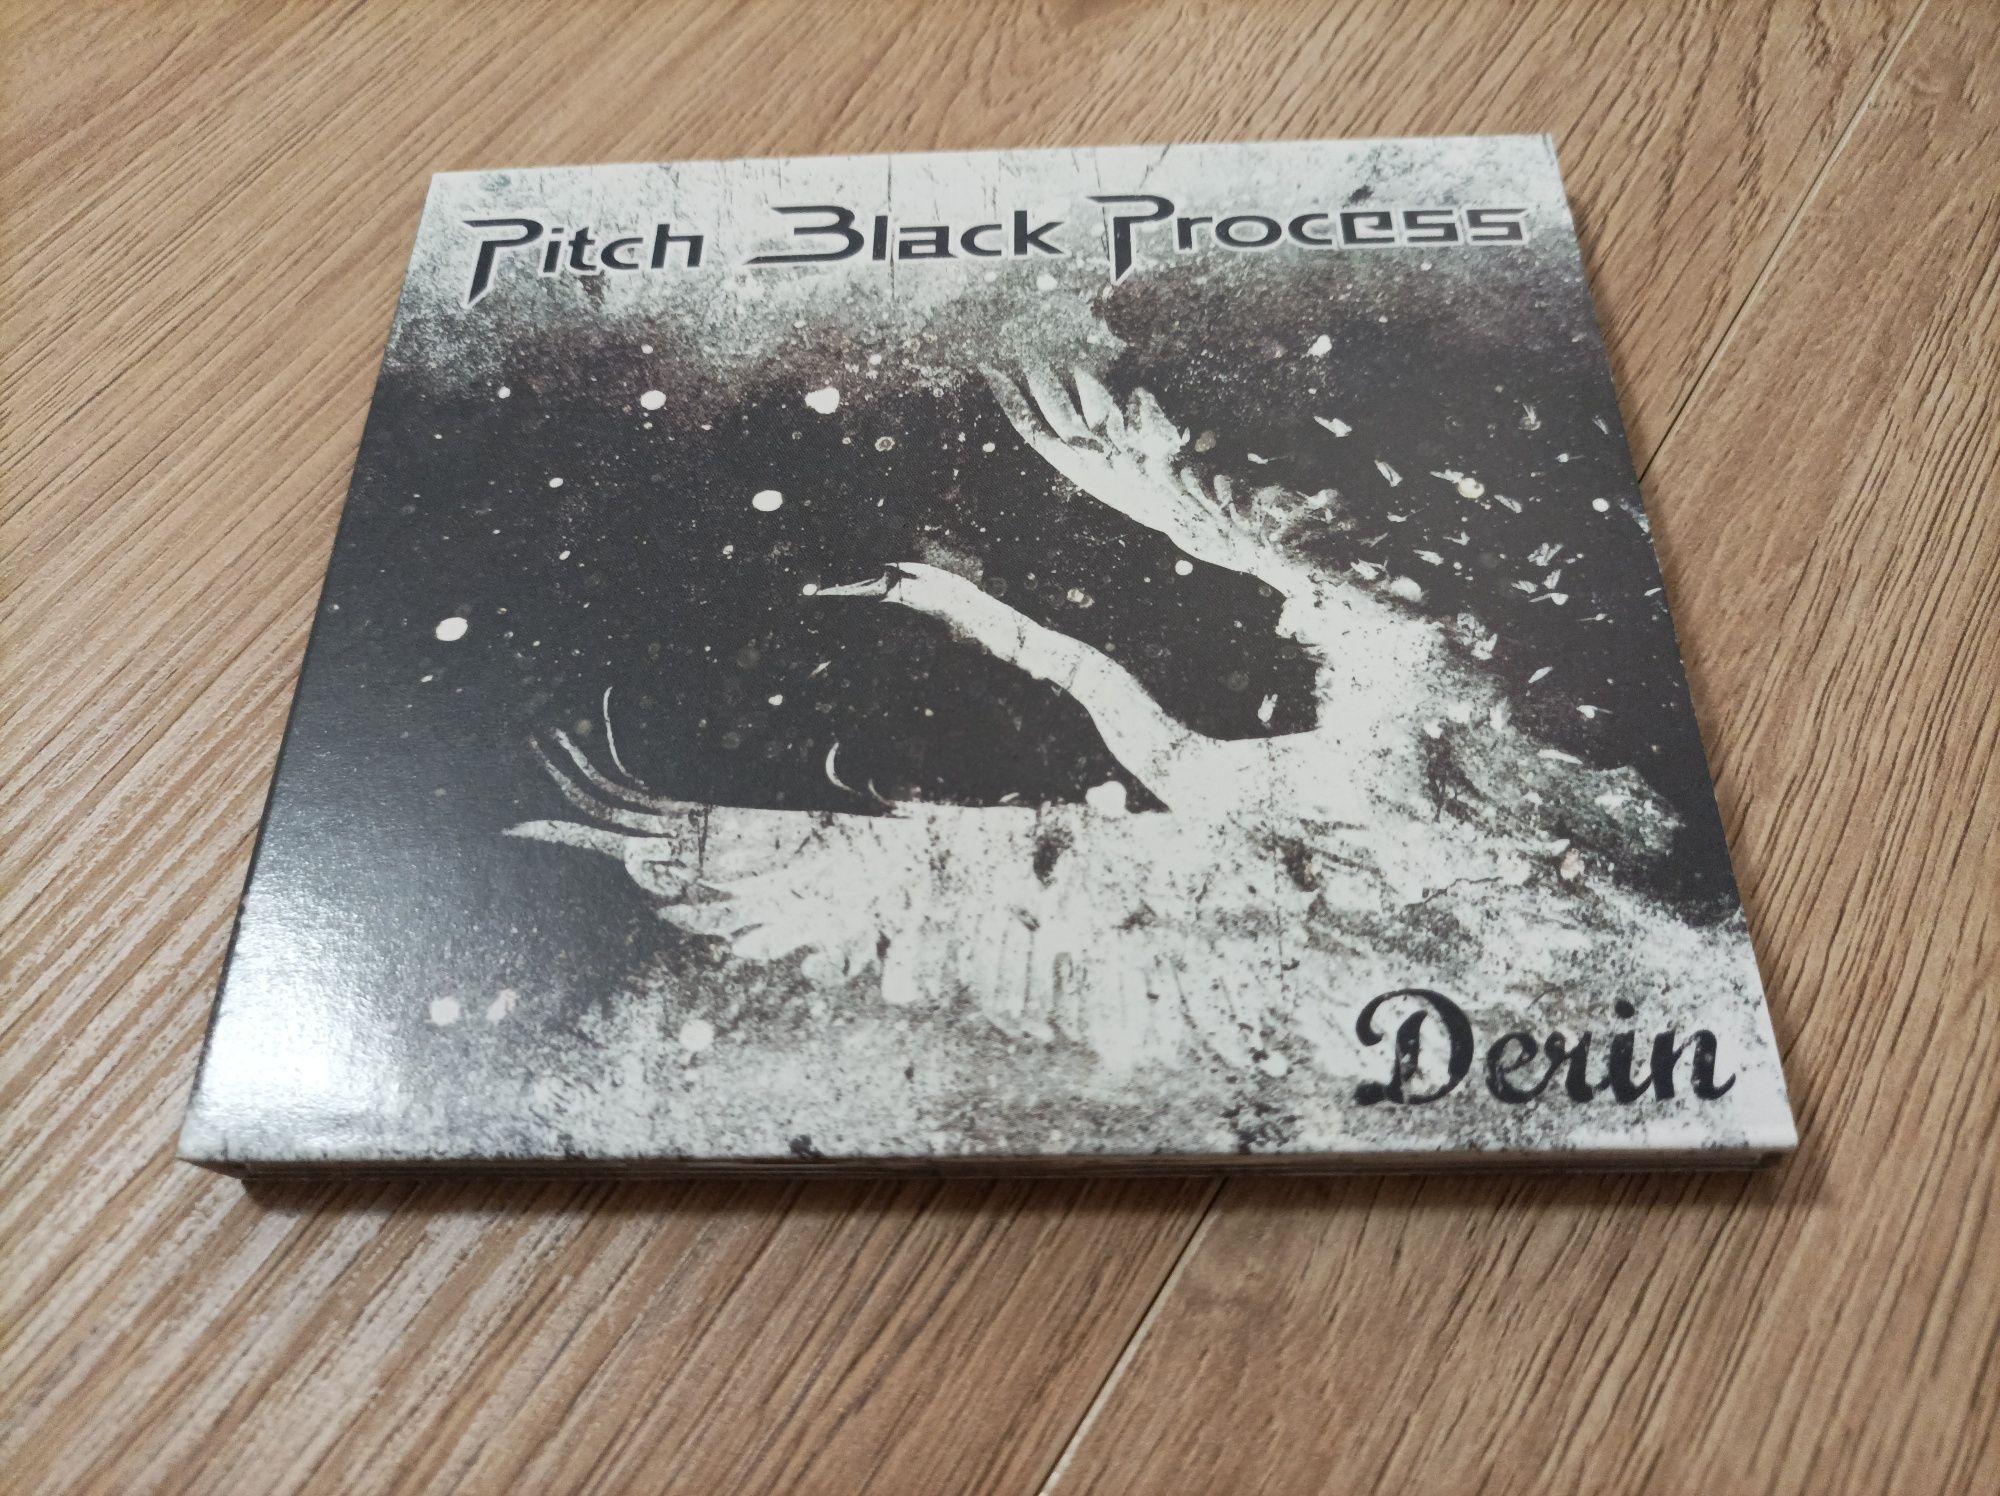 Pitch Black Process - "Derin"